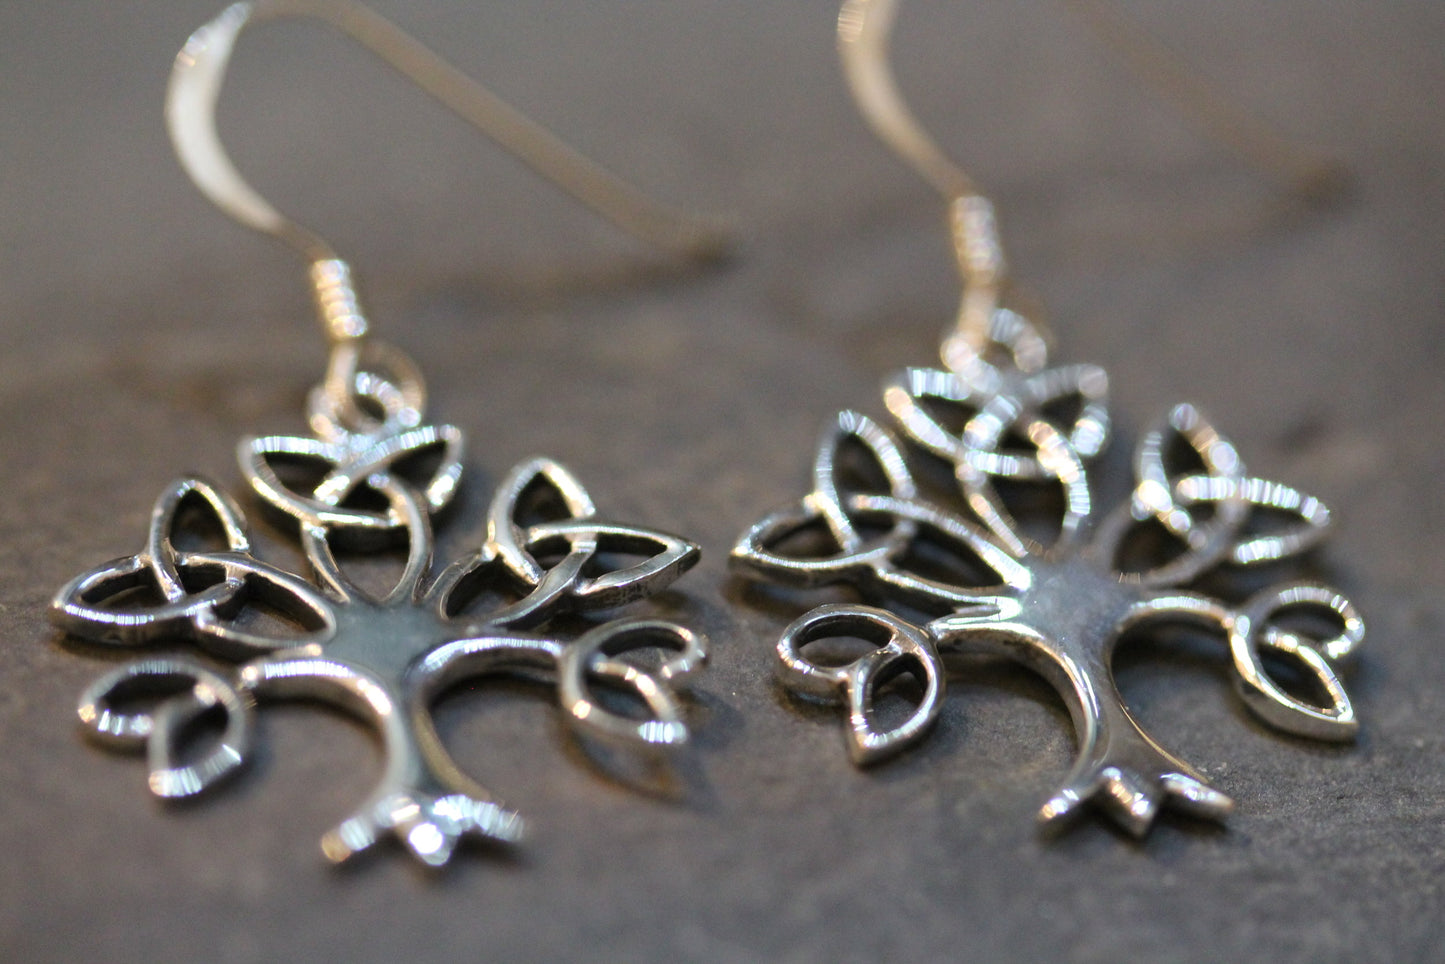 Tree of Life Earrings - Trinity Knot Leaf